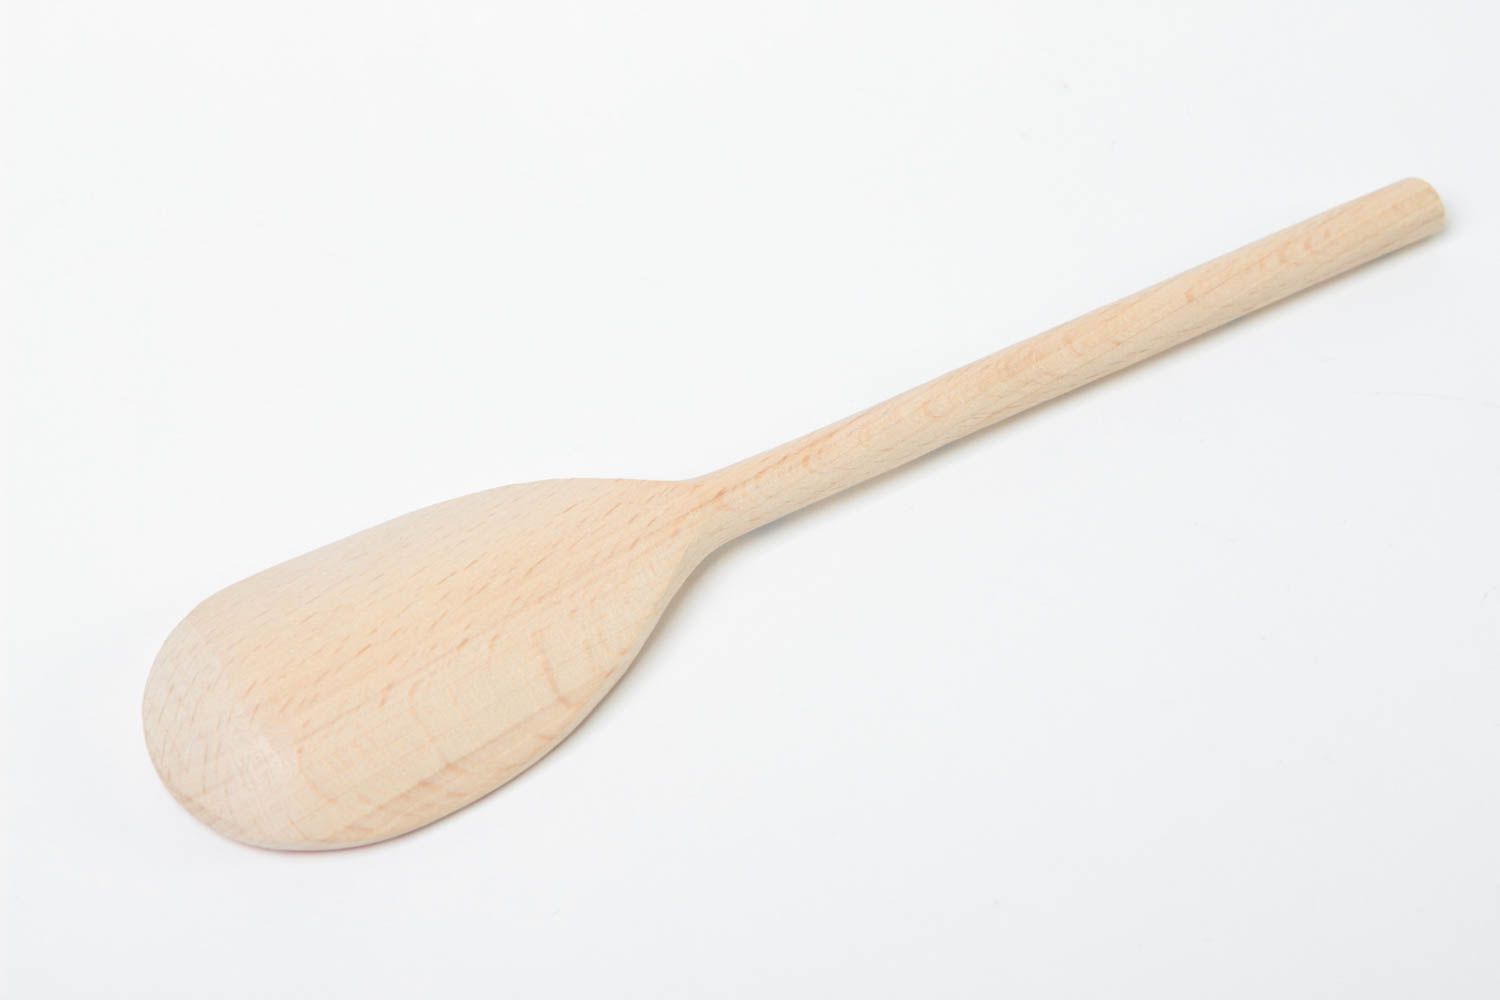 Handmade wooden spoon unusual spoon ideas for home decorative tableware photo 4